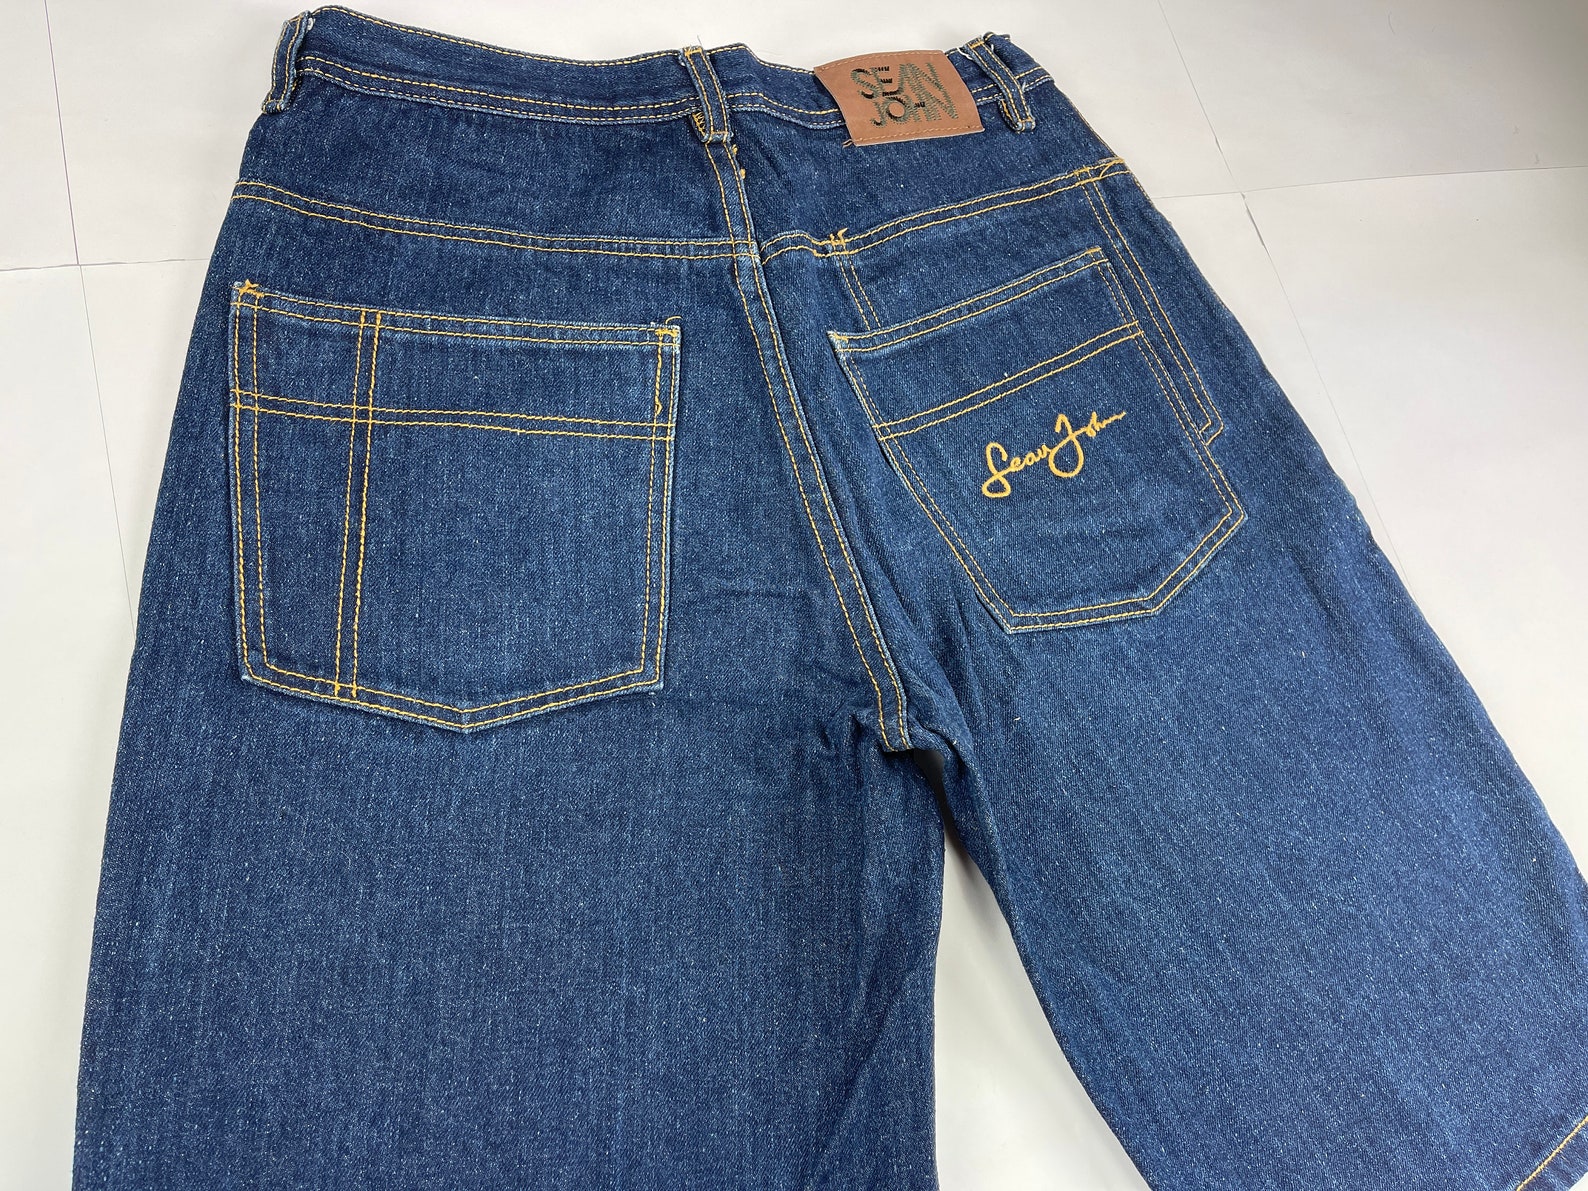 Sean John Shorts Vintage Jeans Shorts 90s Hip Hop Clothing | Etsy